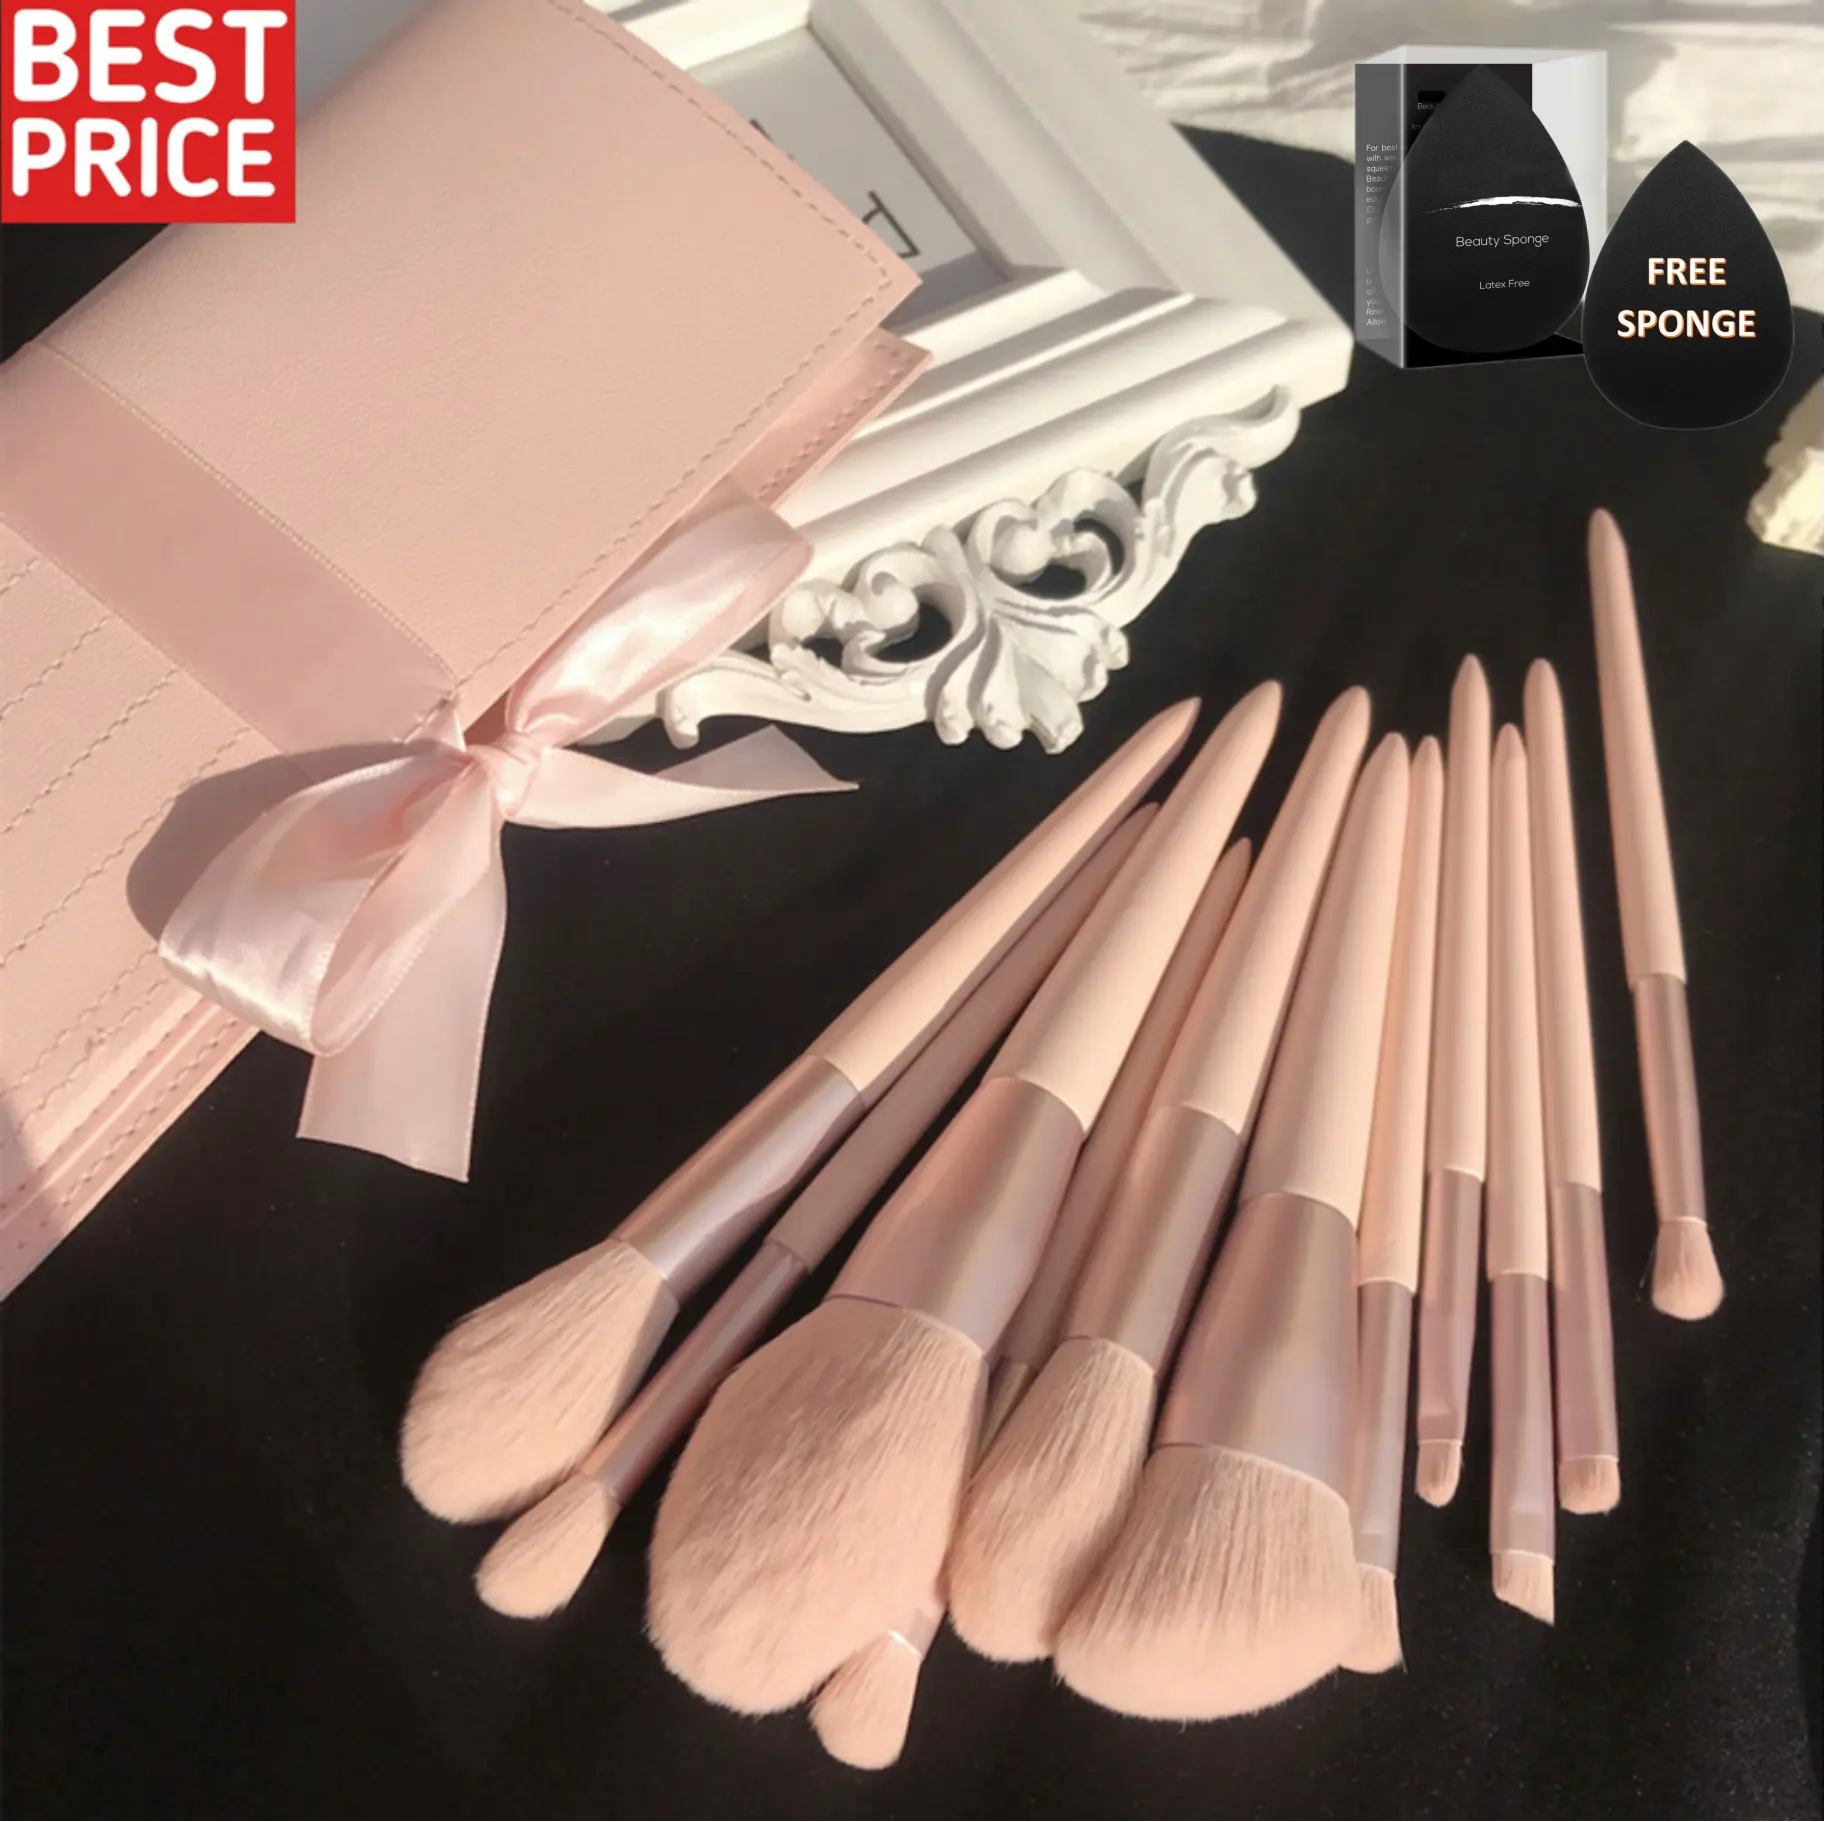 Makeup Brush Set 11pcs Premium Cosmetic Brush for Foundation Blush Concealer Eyeshadow eyebrow highlight Pink Make up brush